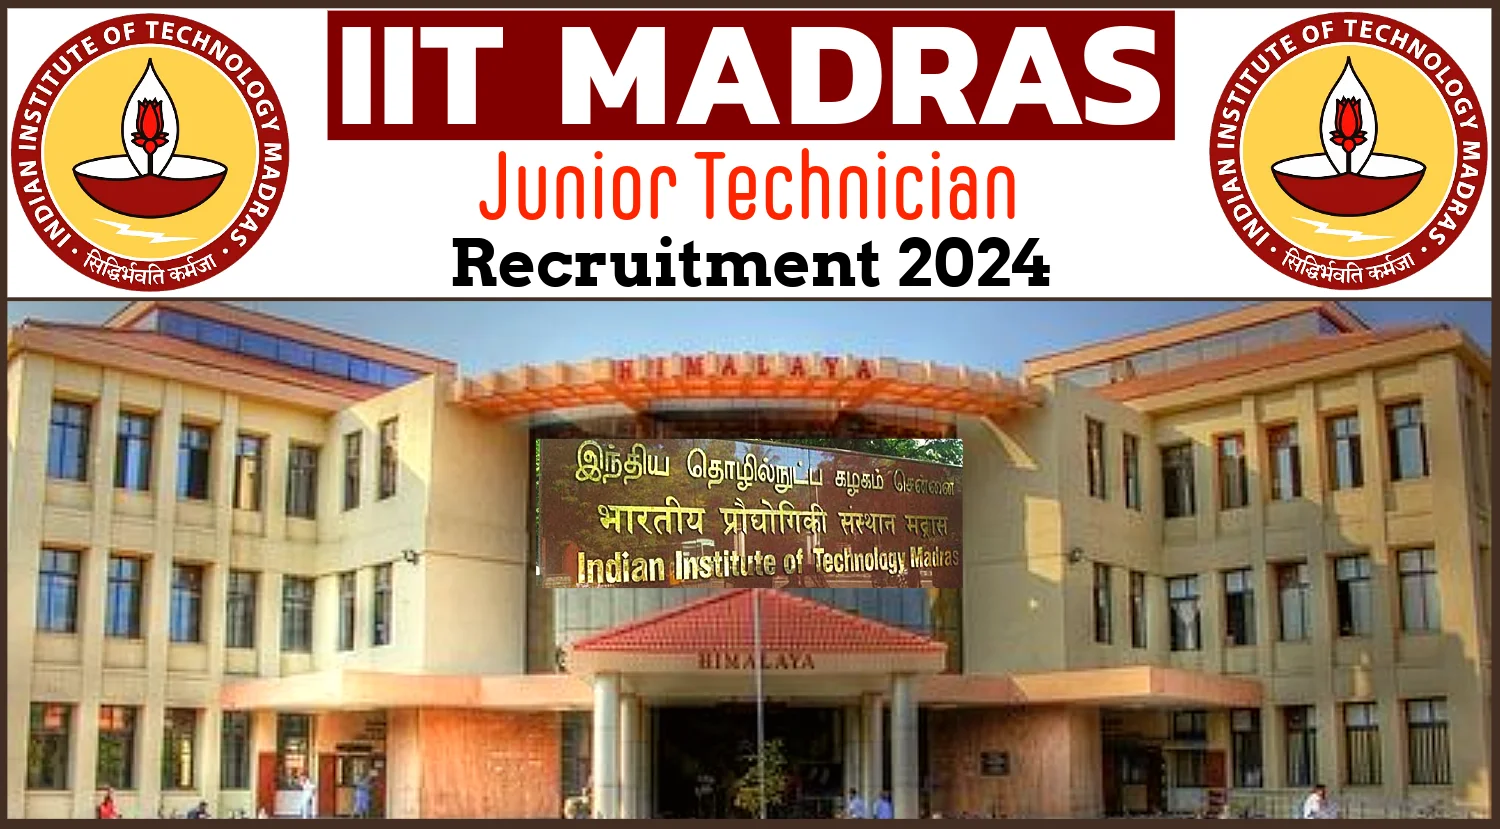 IIT Madras Junior Technician Recruitment 2024